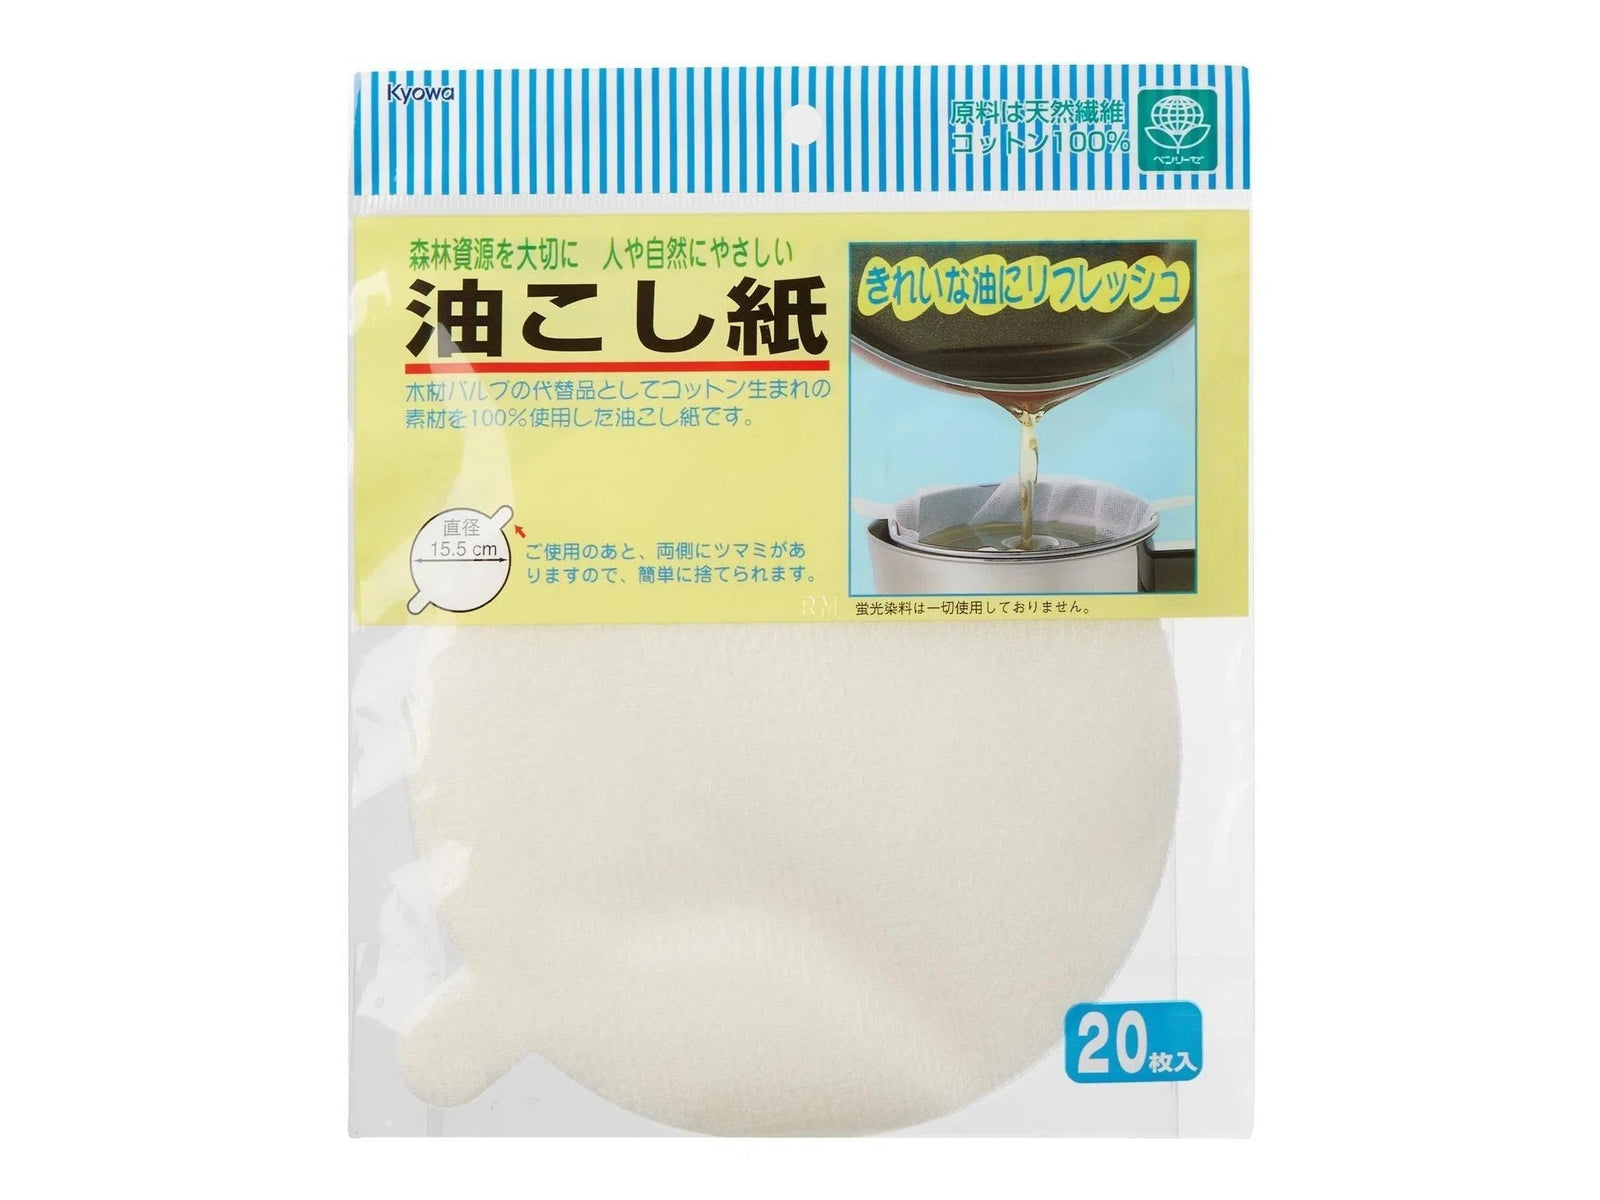 Kyowa Paper Oil Filter 20pcs